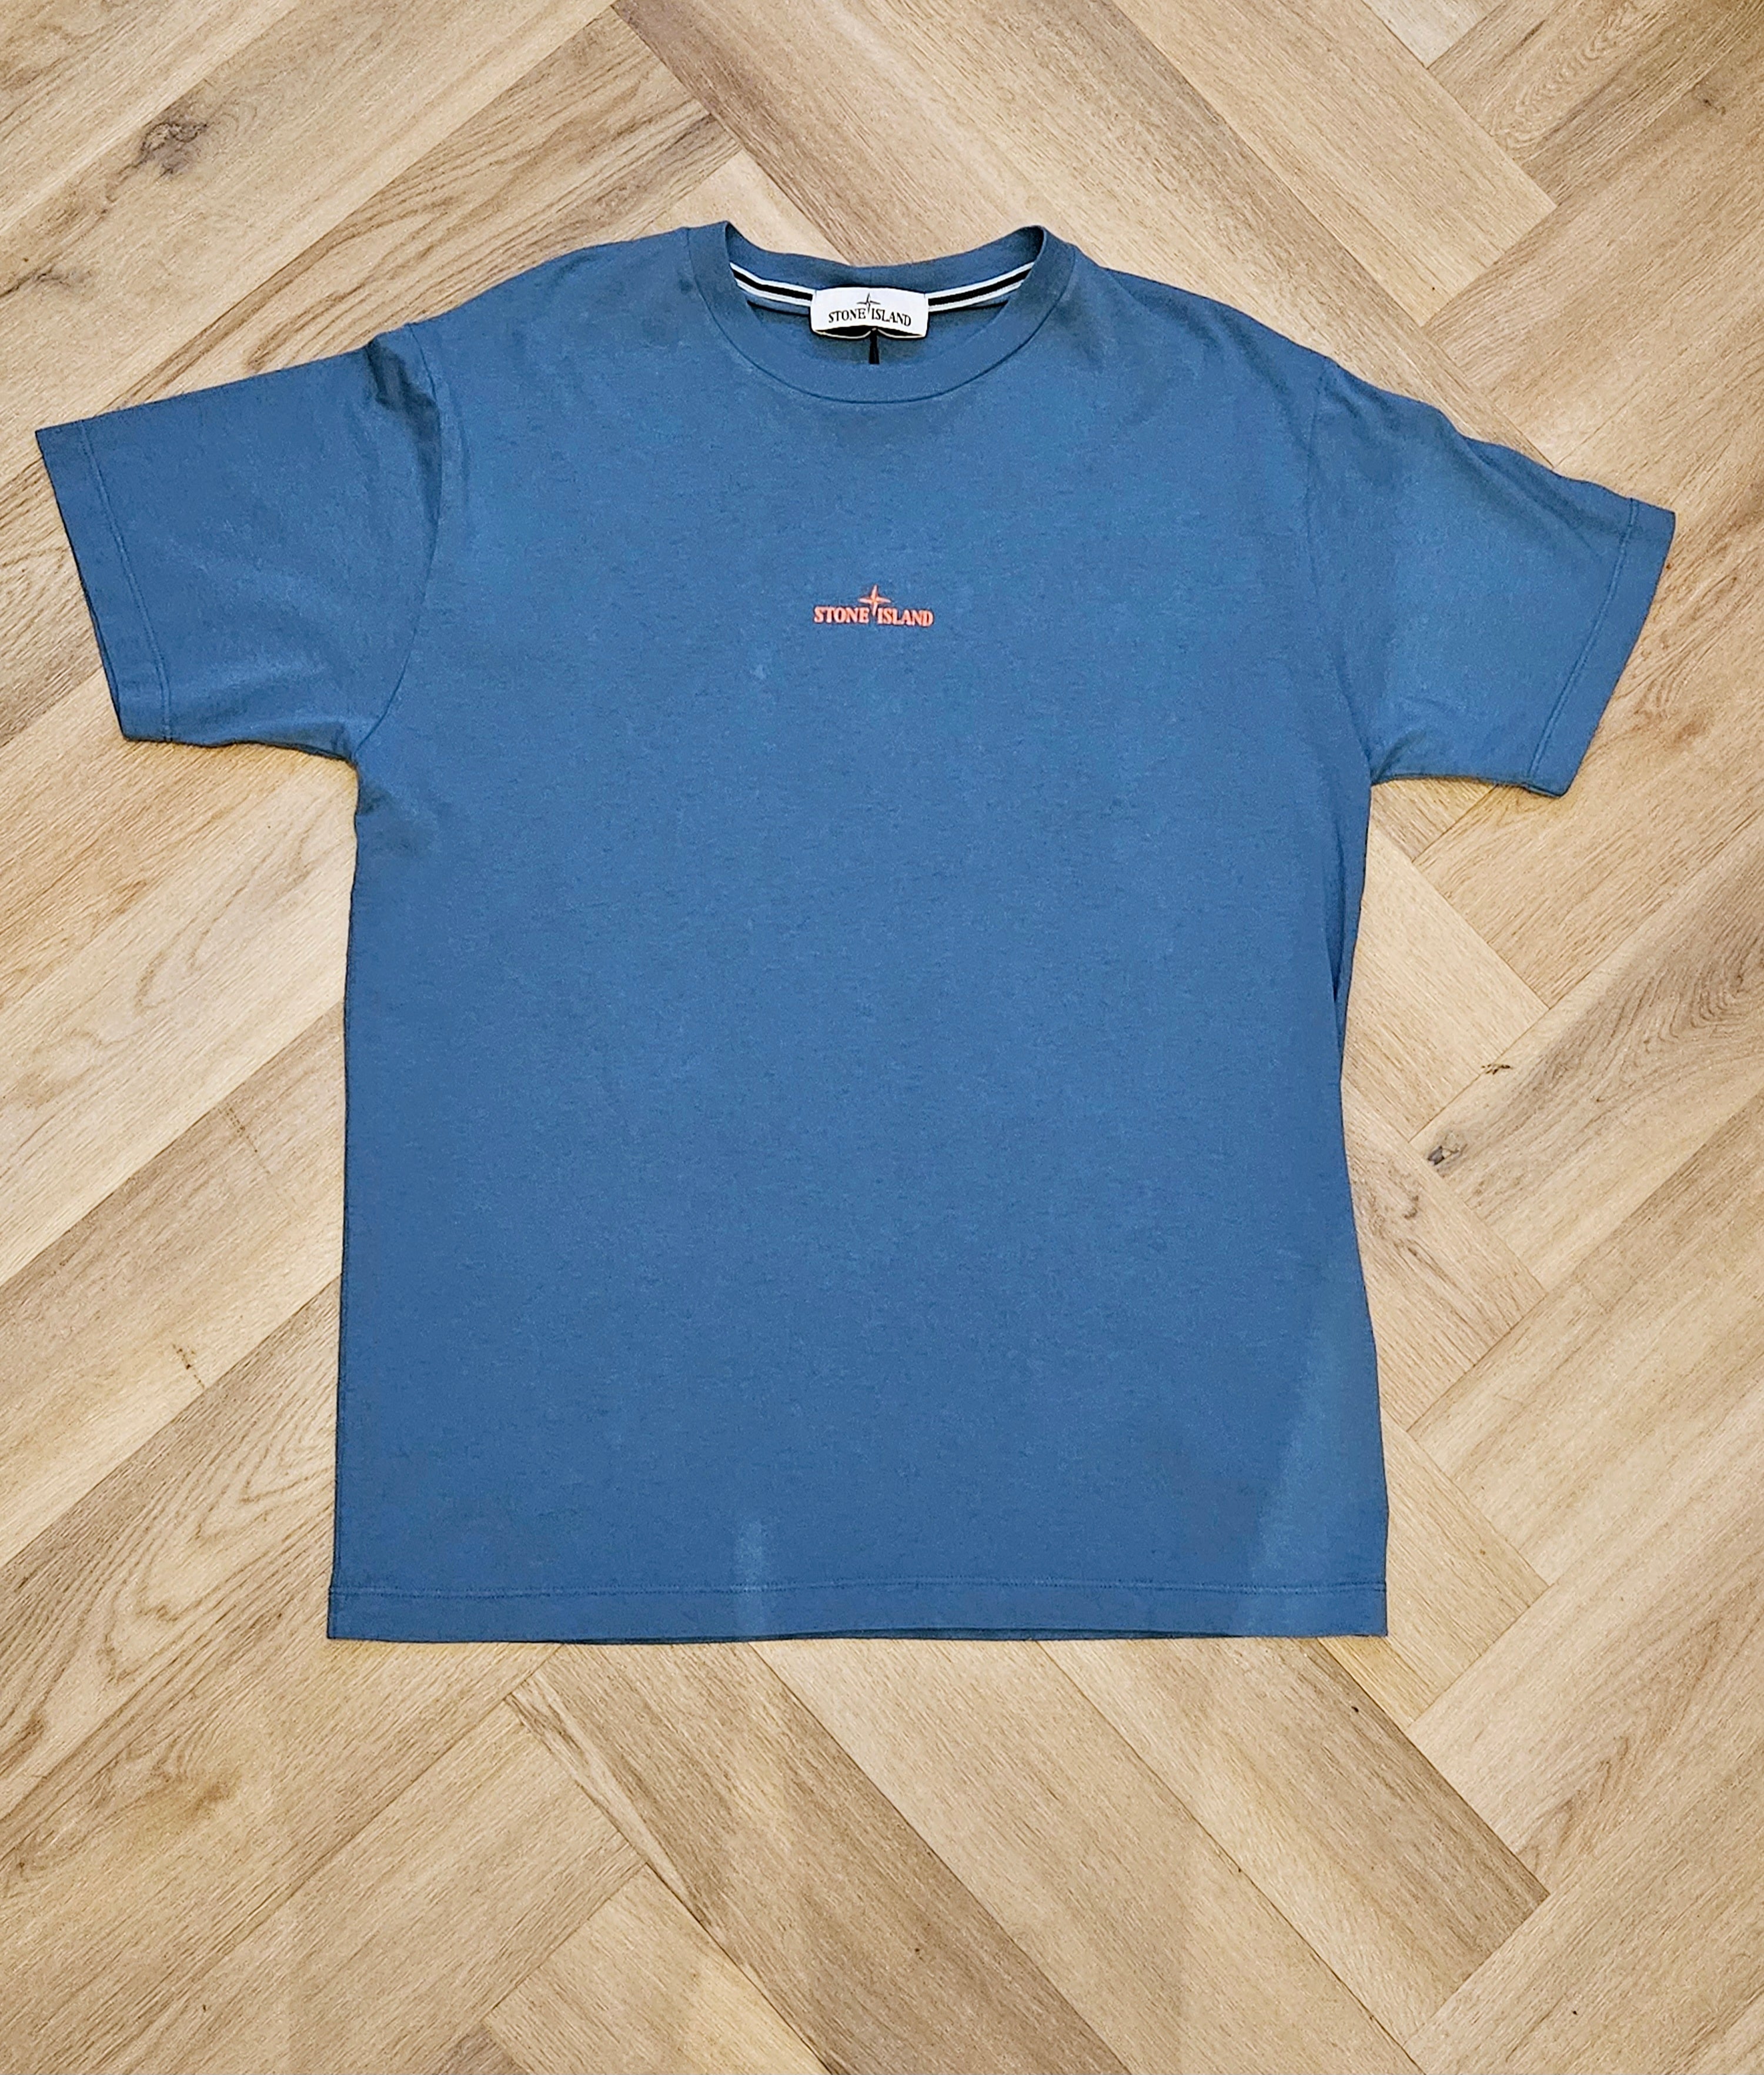 Stone Island Graphic T Shirt Sugar Blue